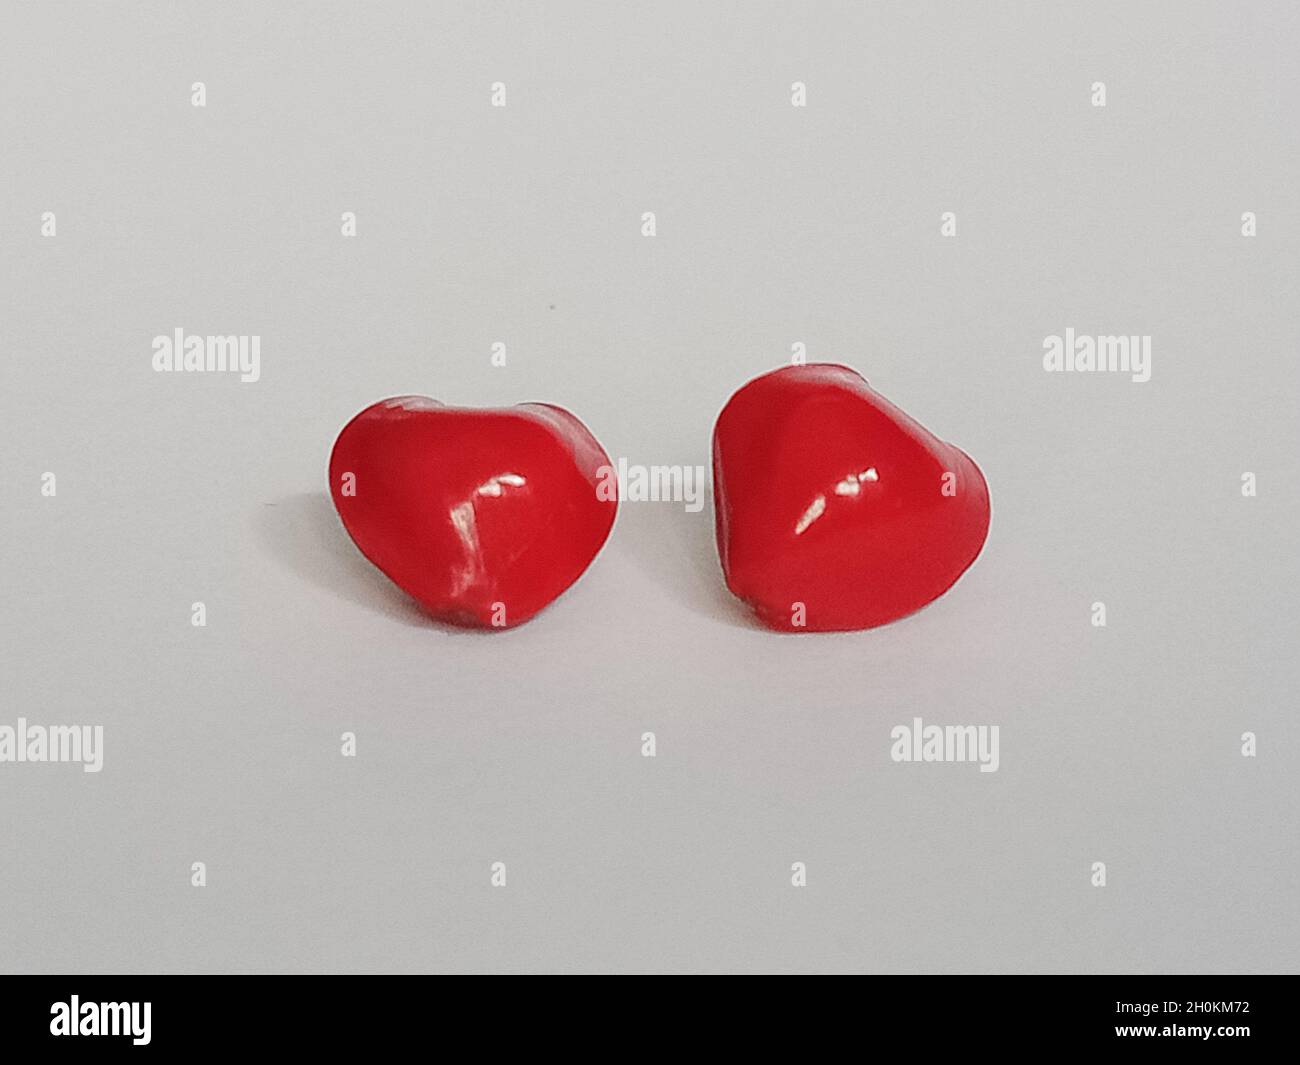 red heart shape saga seeds Stock Photo